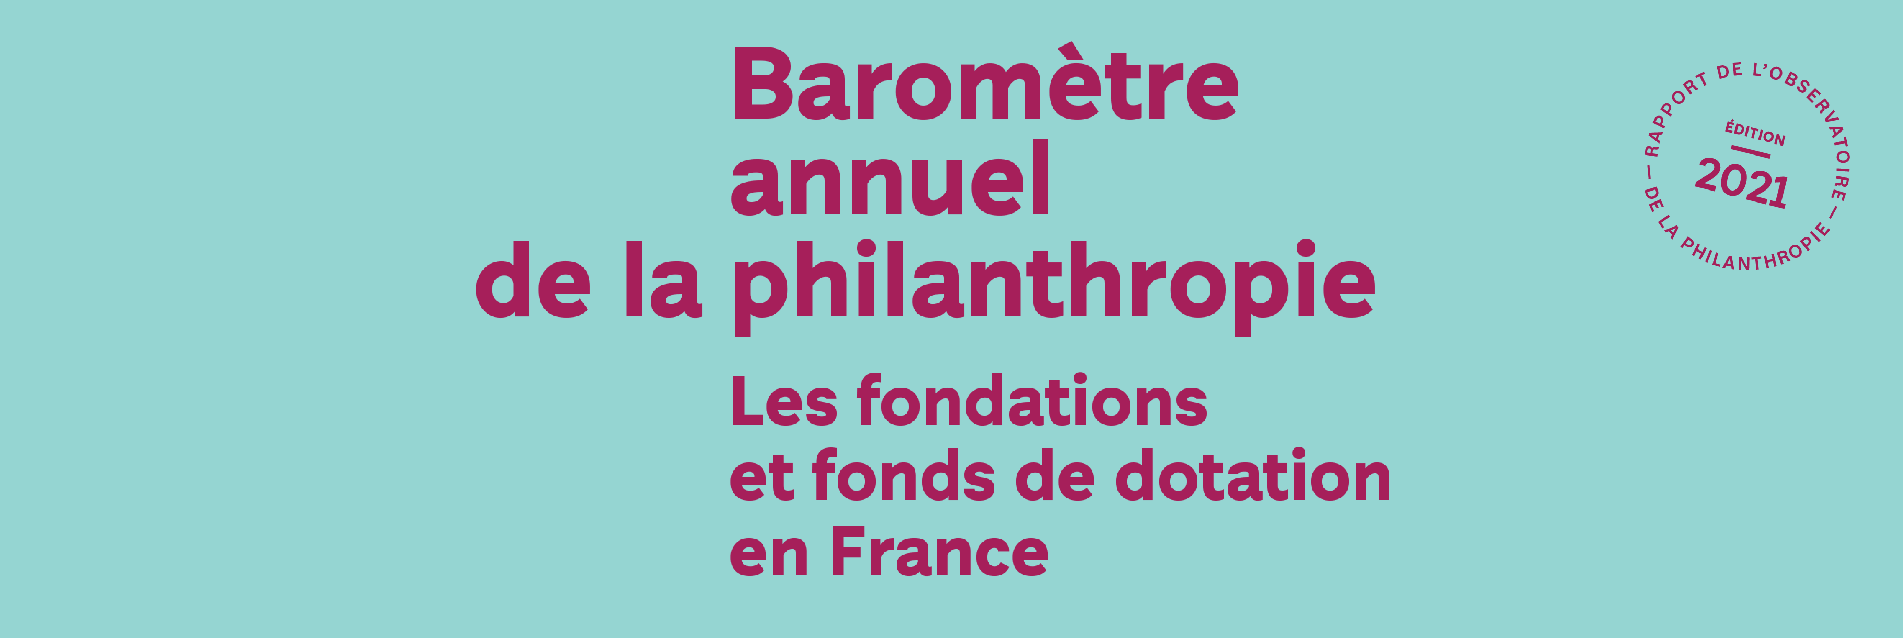 Baromètre annuel de la philanthropie 2021